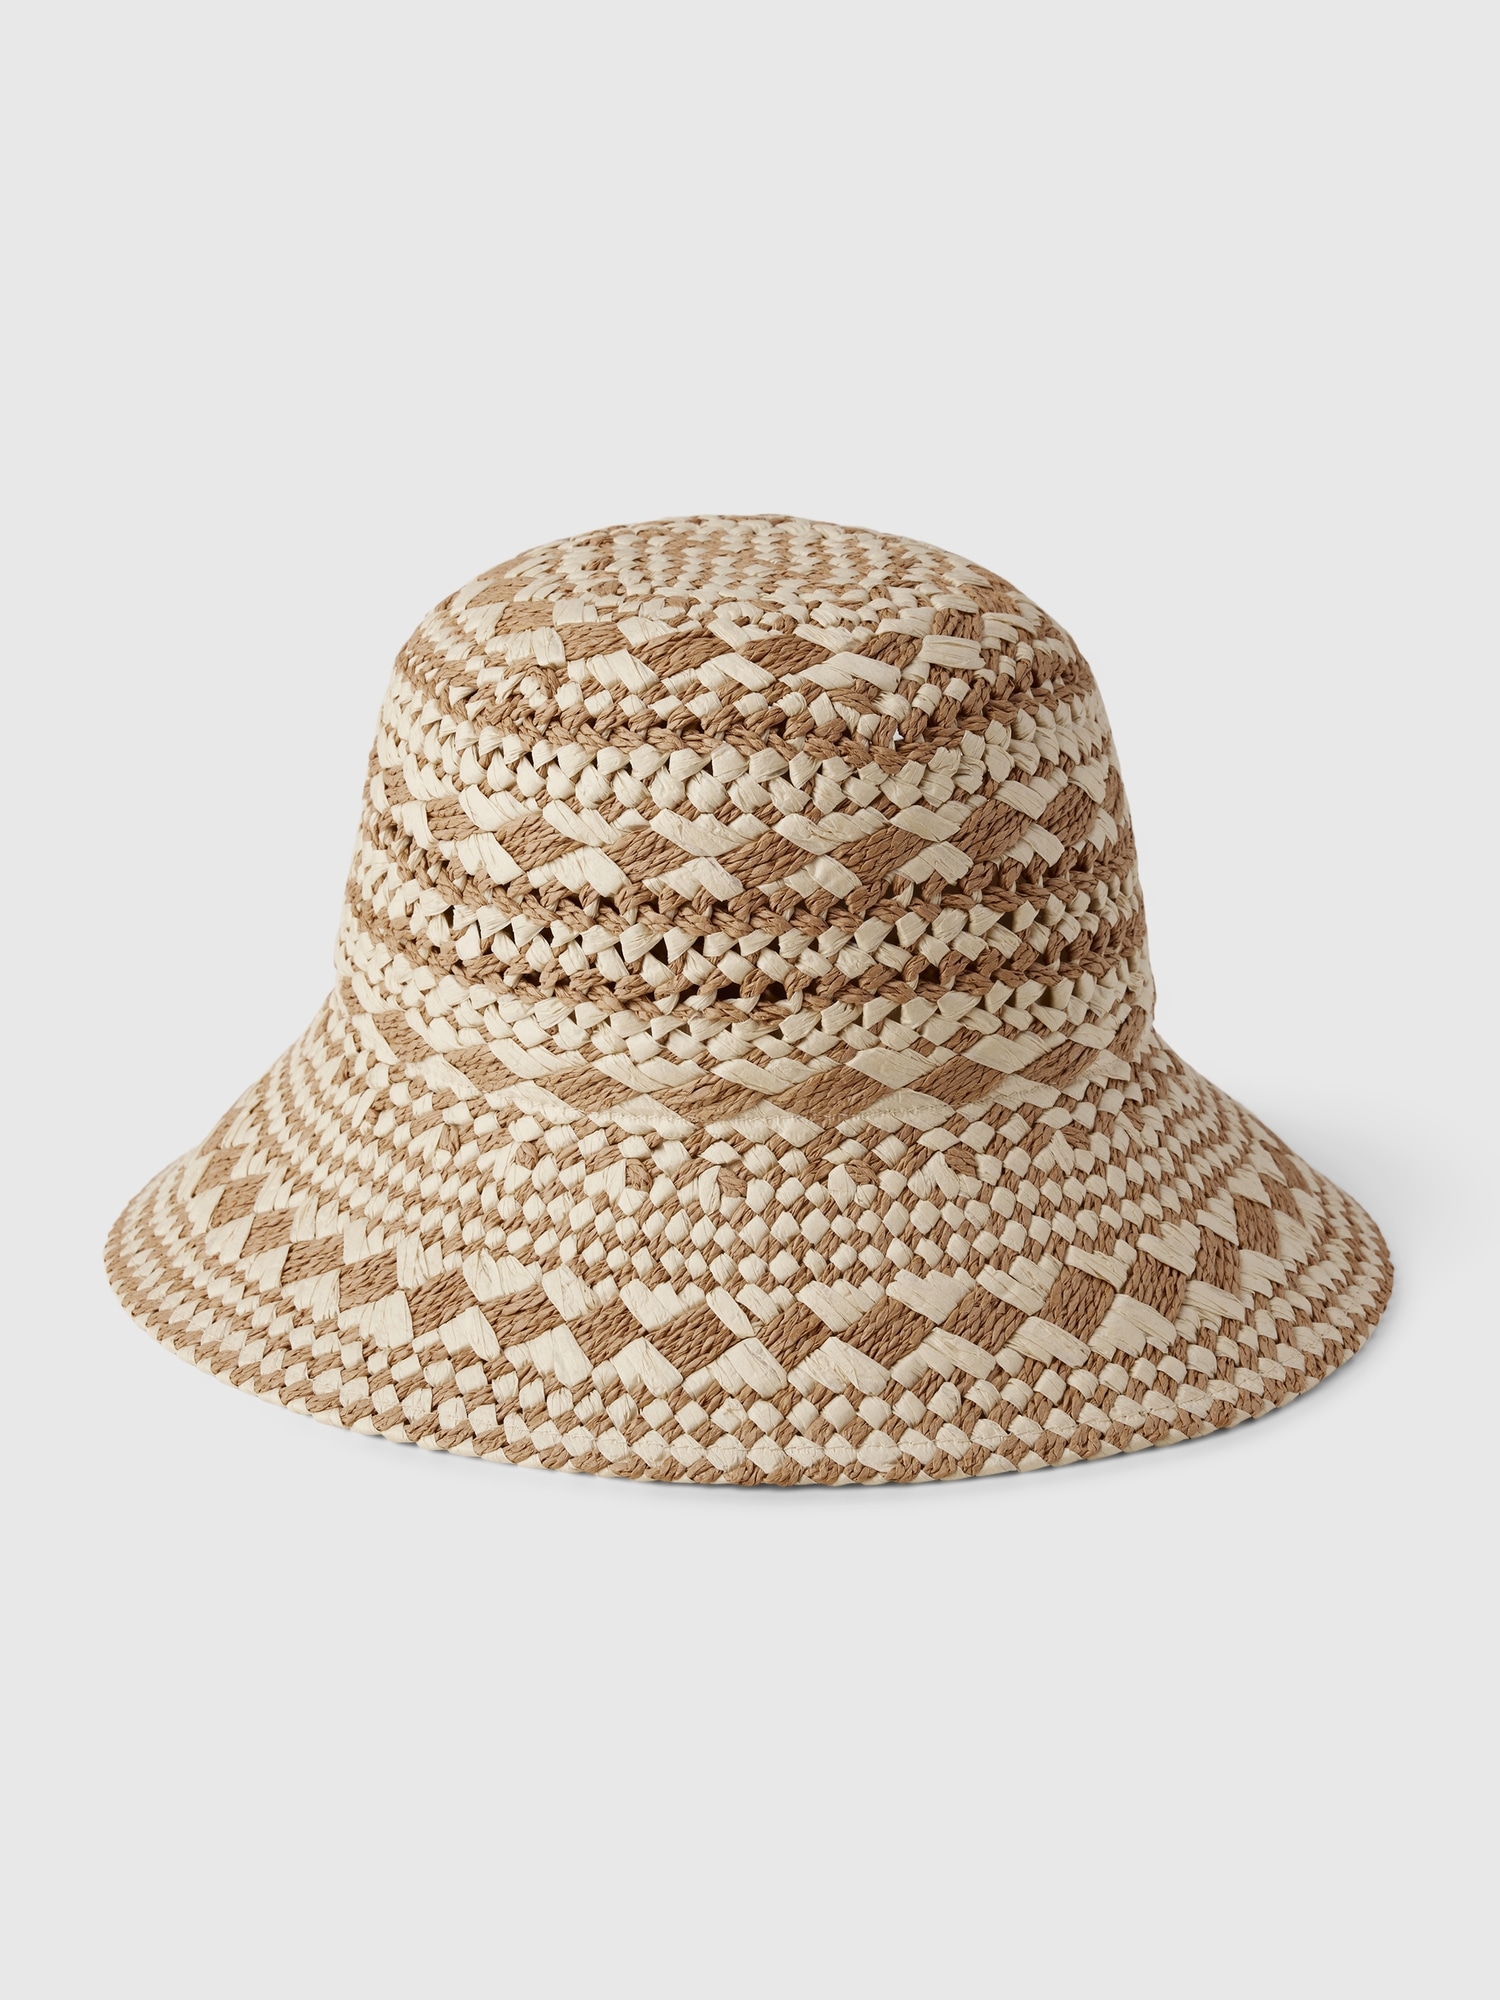 Women's Straw Bucket Hat by Gap Brown Size M/L